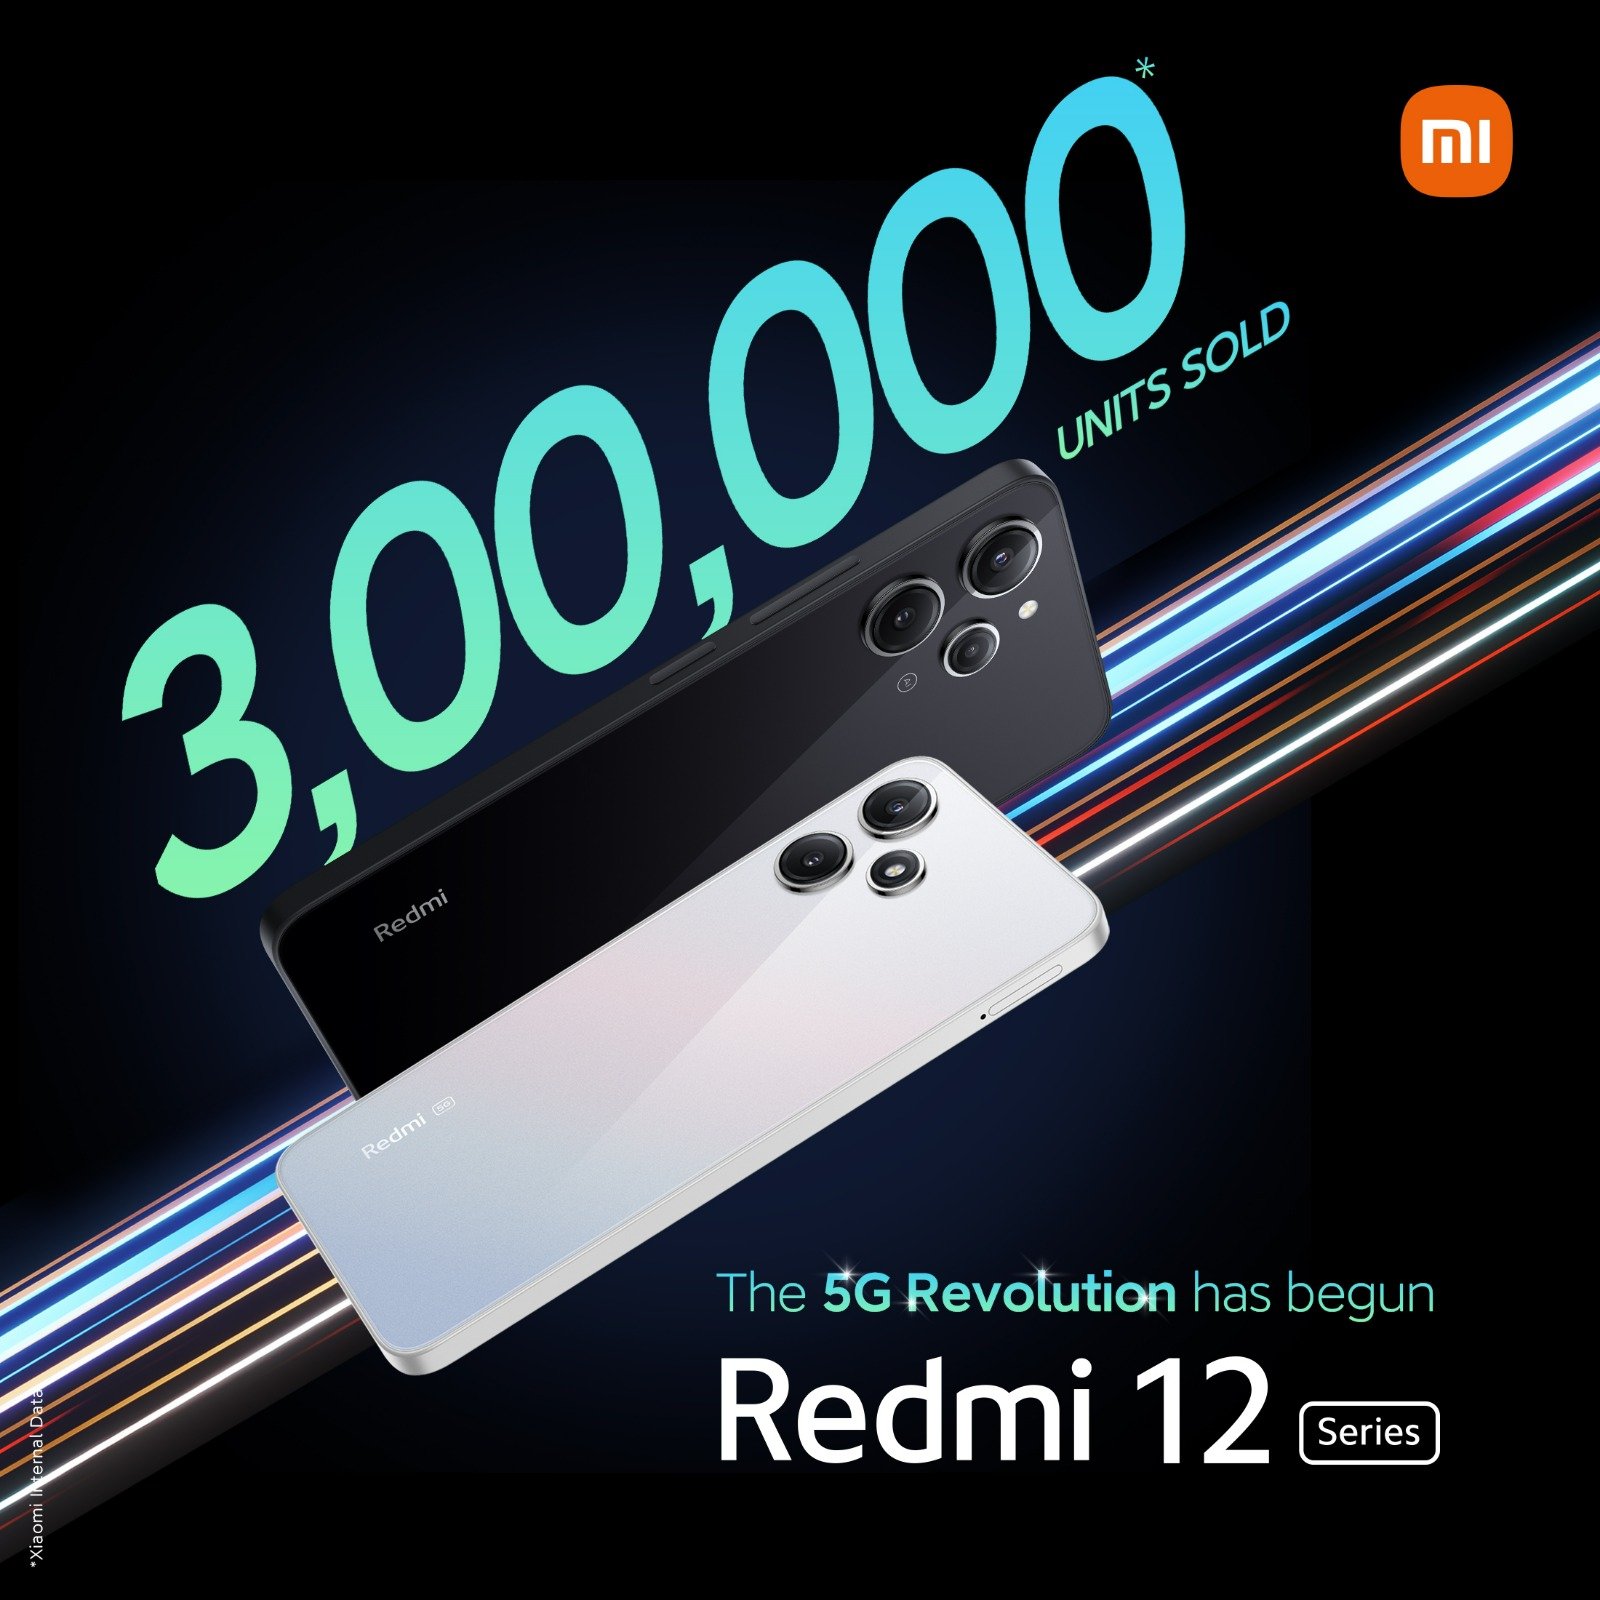 Redmi 12 Series sales surpass 3,00,000 units as 5G era begins in India